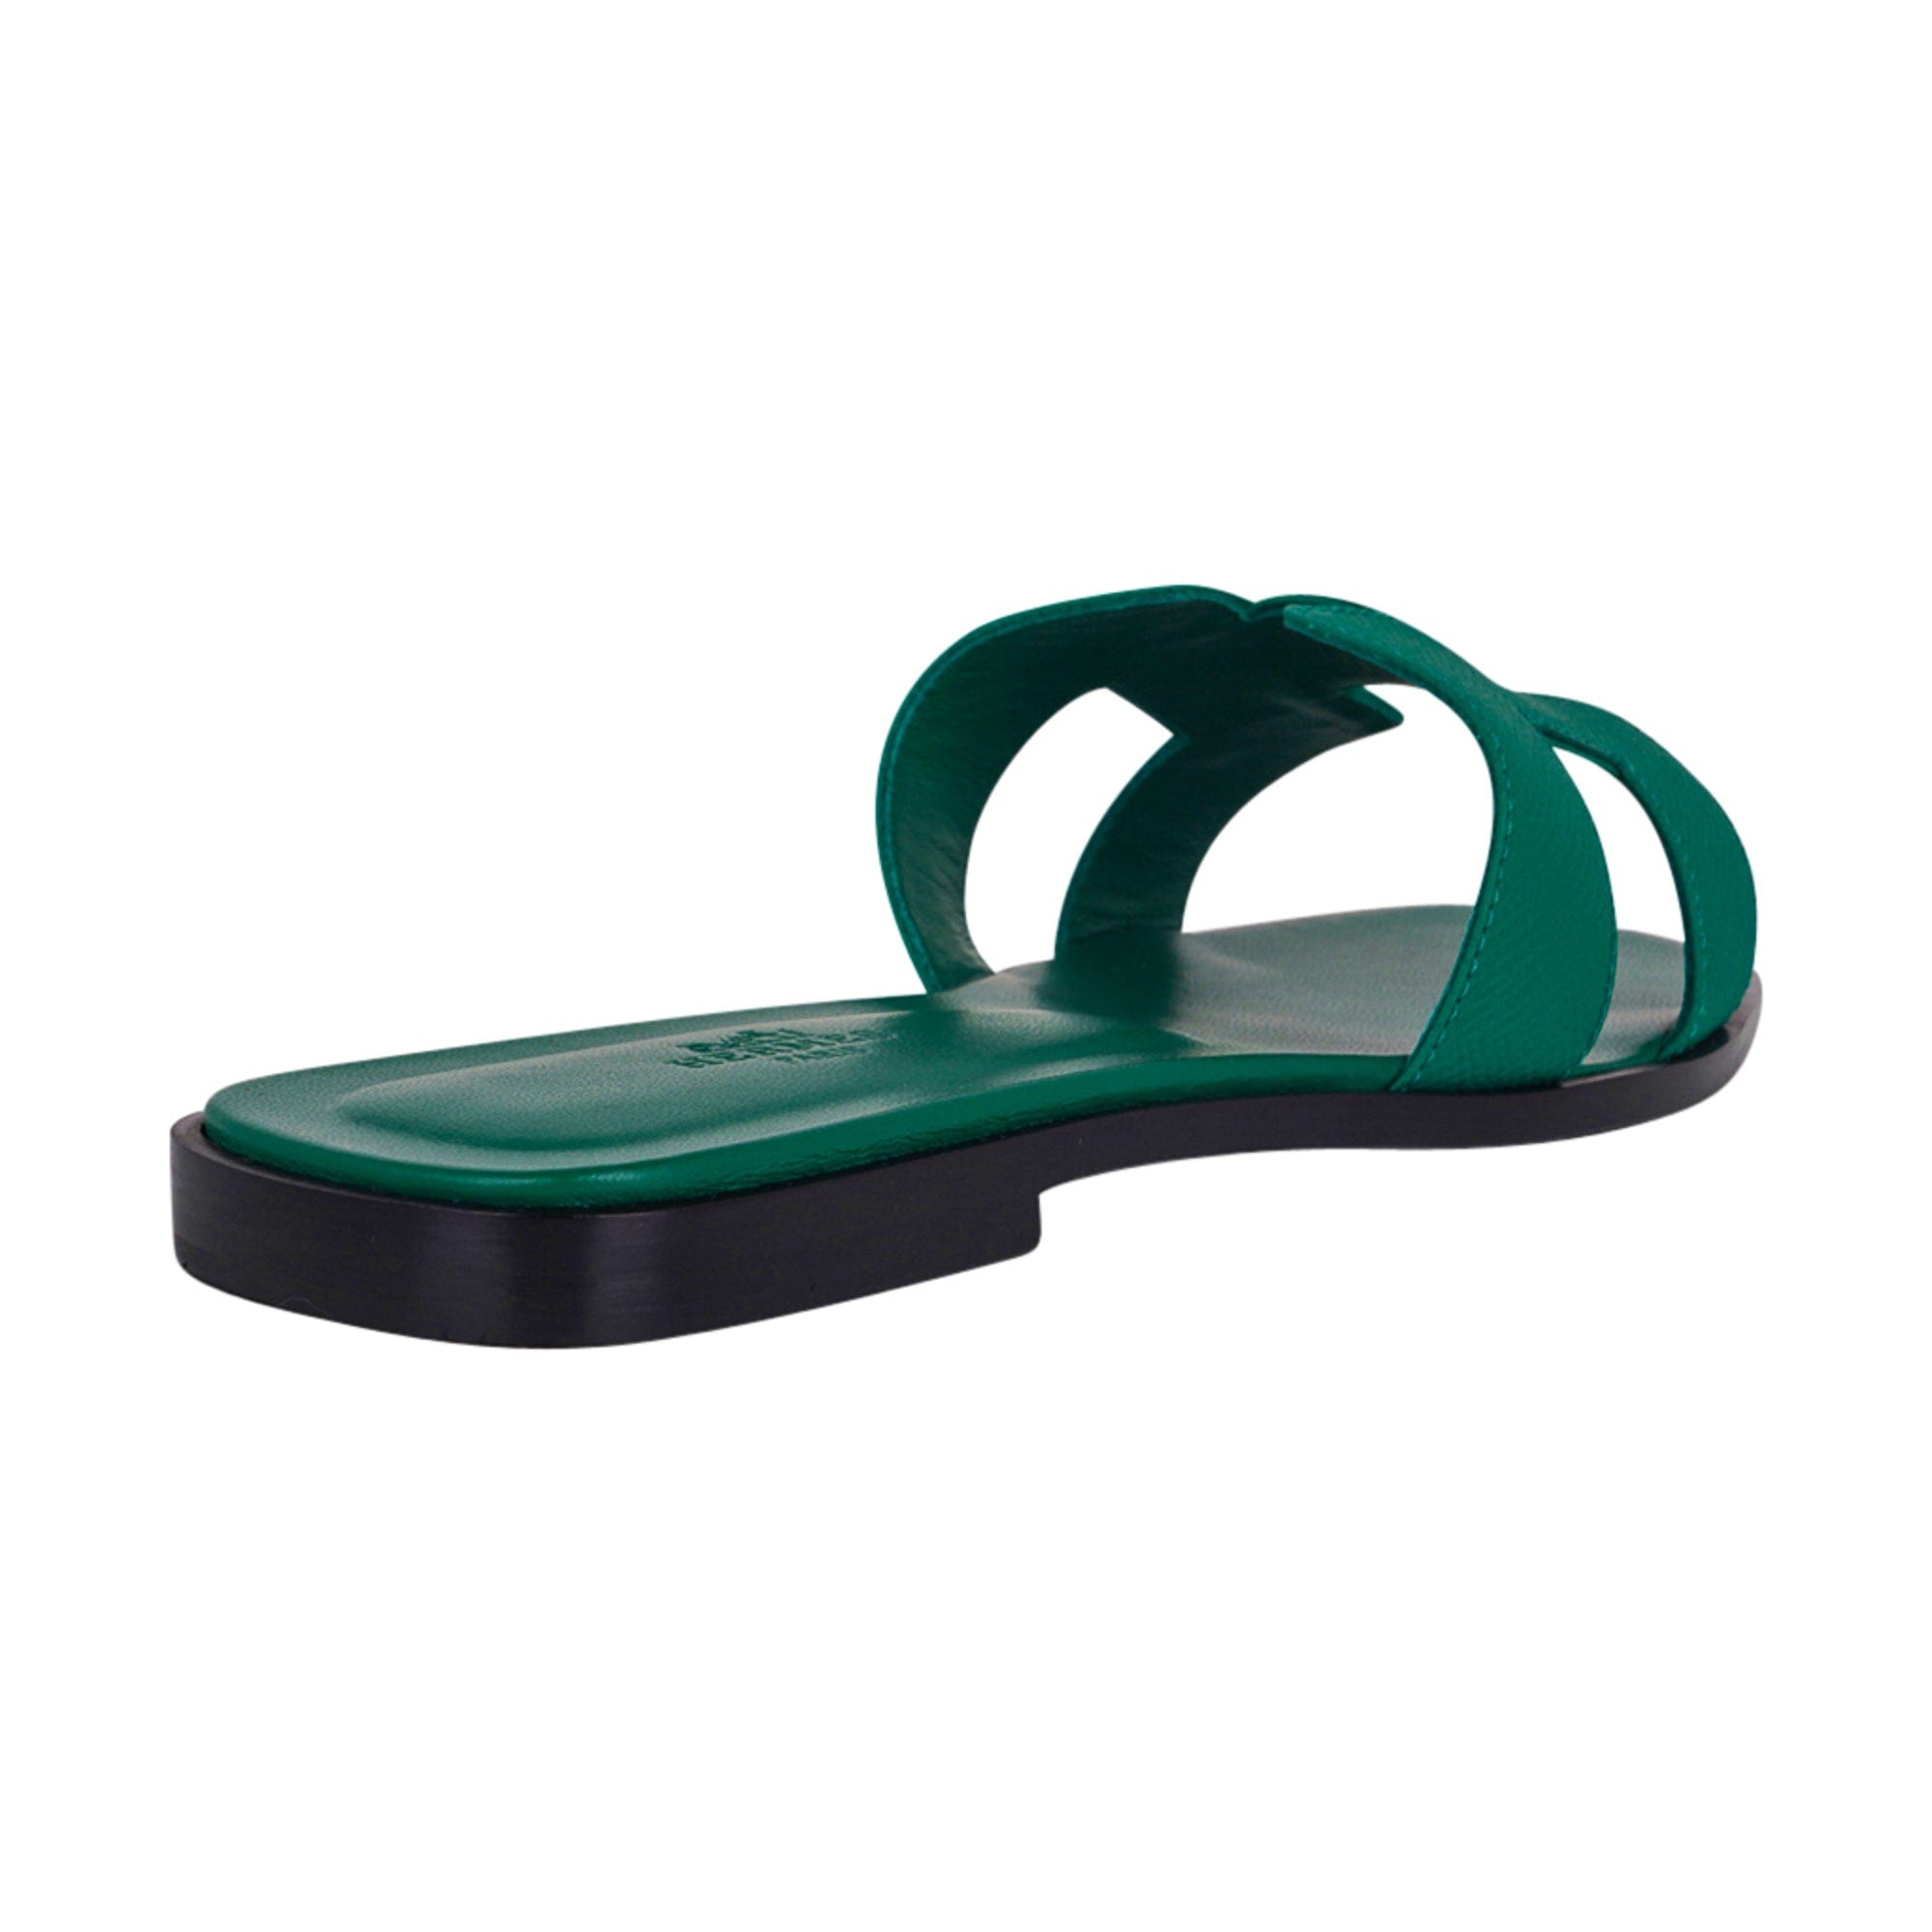 Hermes Emerald Oran Sandal Epsom Leather Flat Shoes 38.5 / 8.5 New